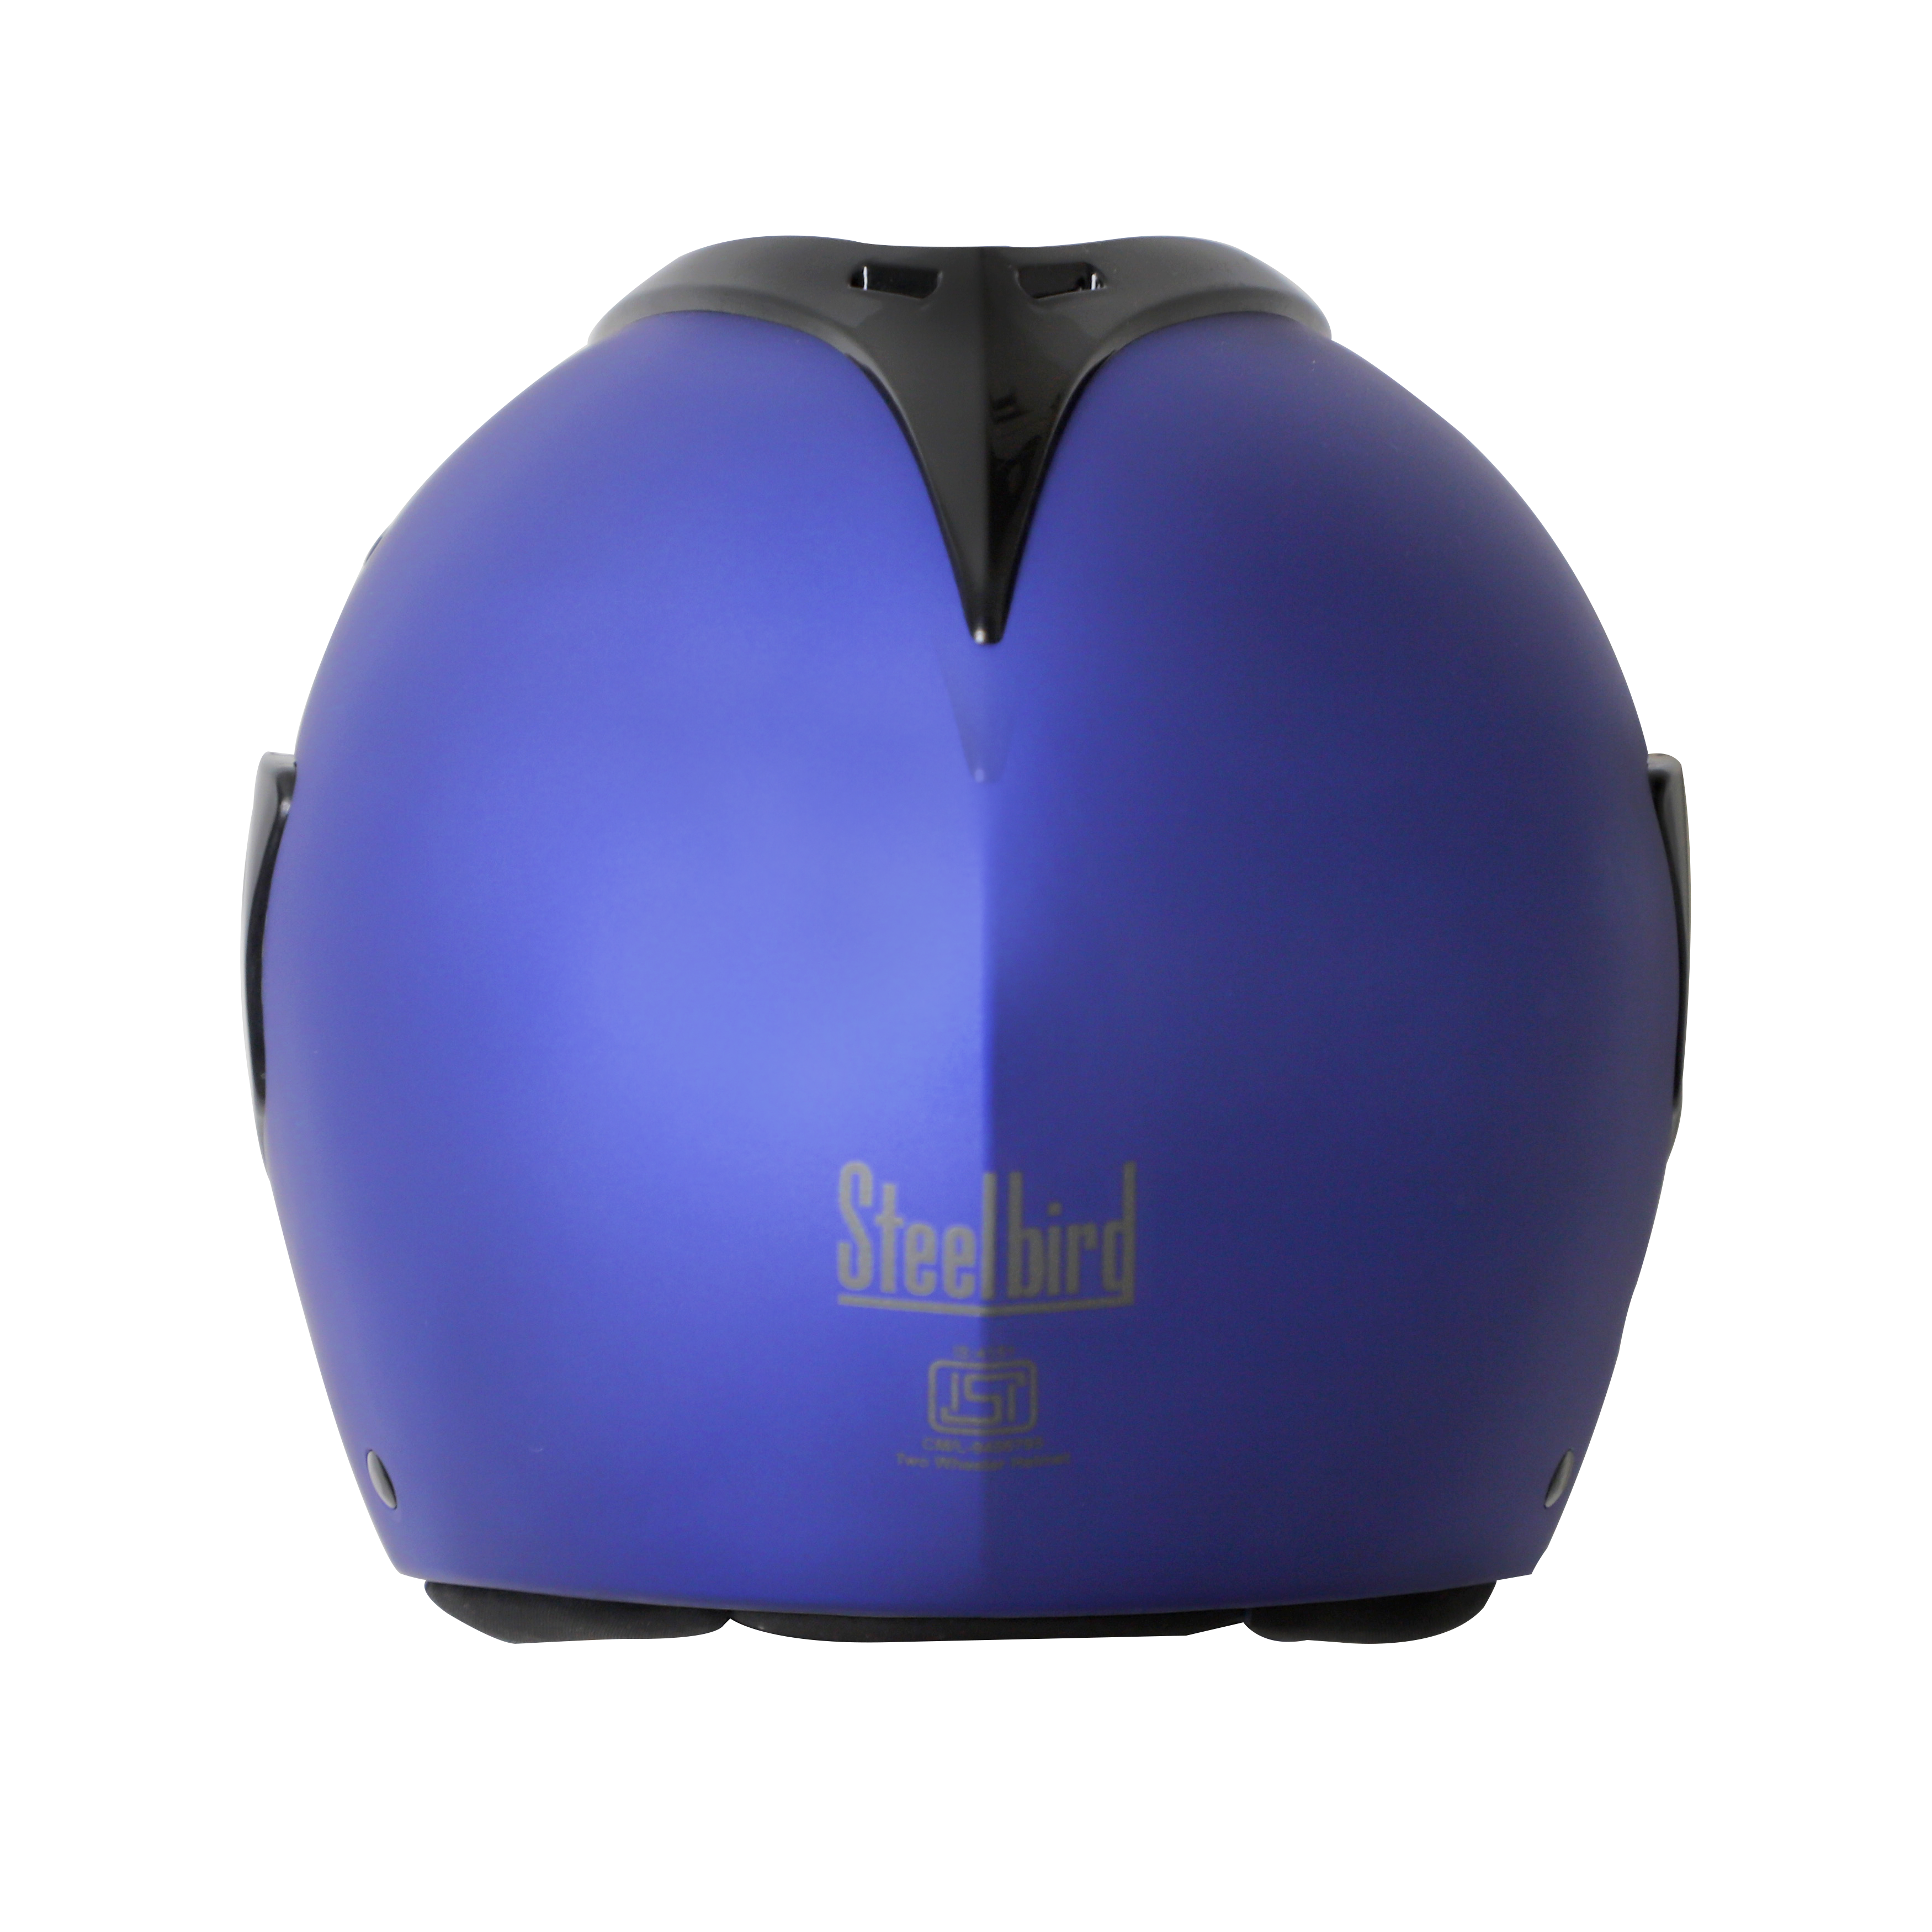 Steelbird SB-34 ISI Certified Flip-Up Helmet For Men And Women (Glossy Y.Blue With Smoke Visor)